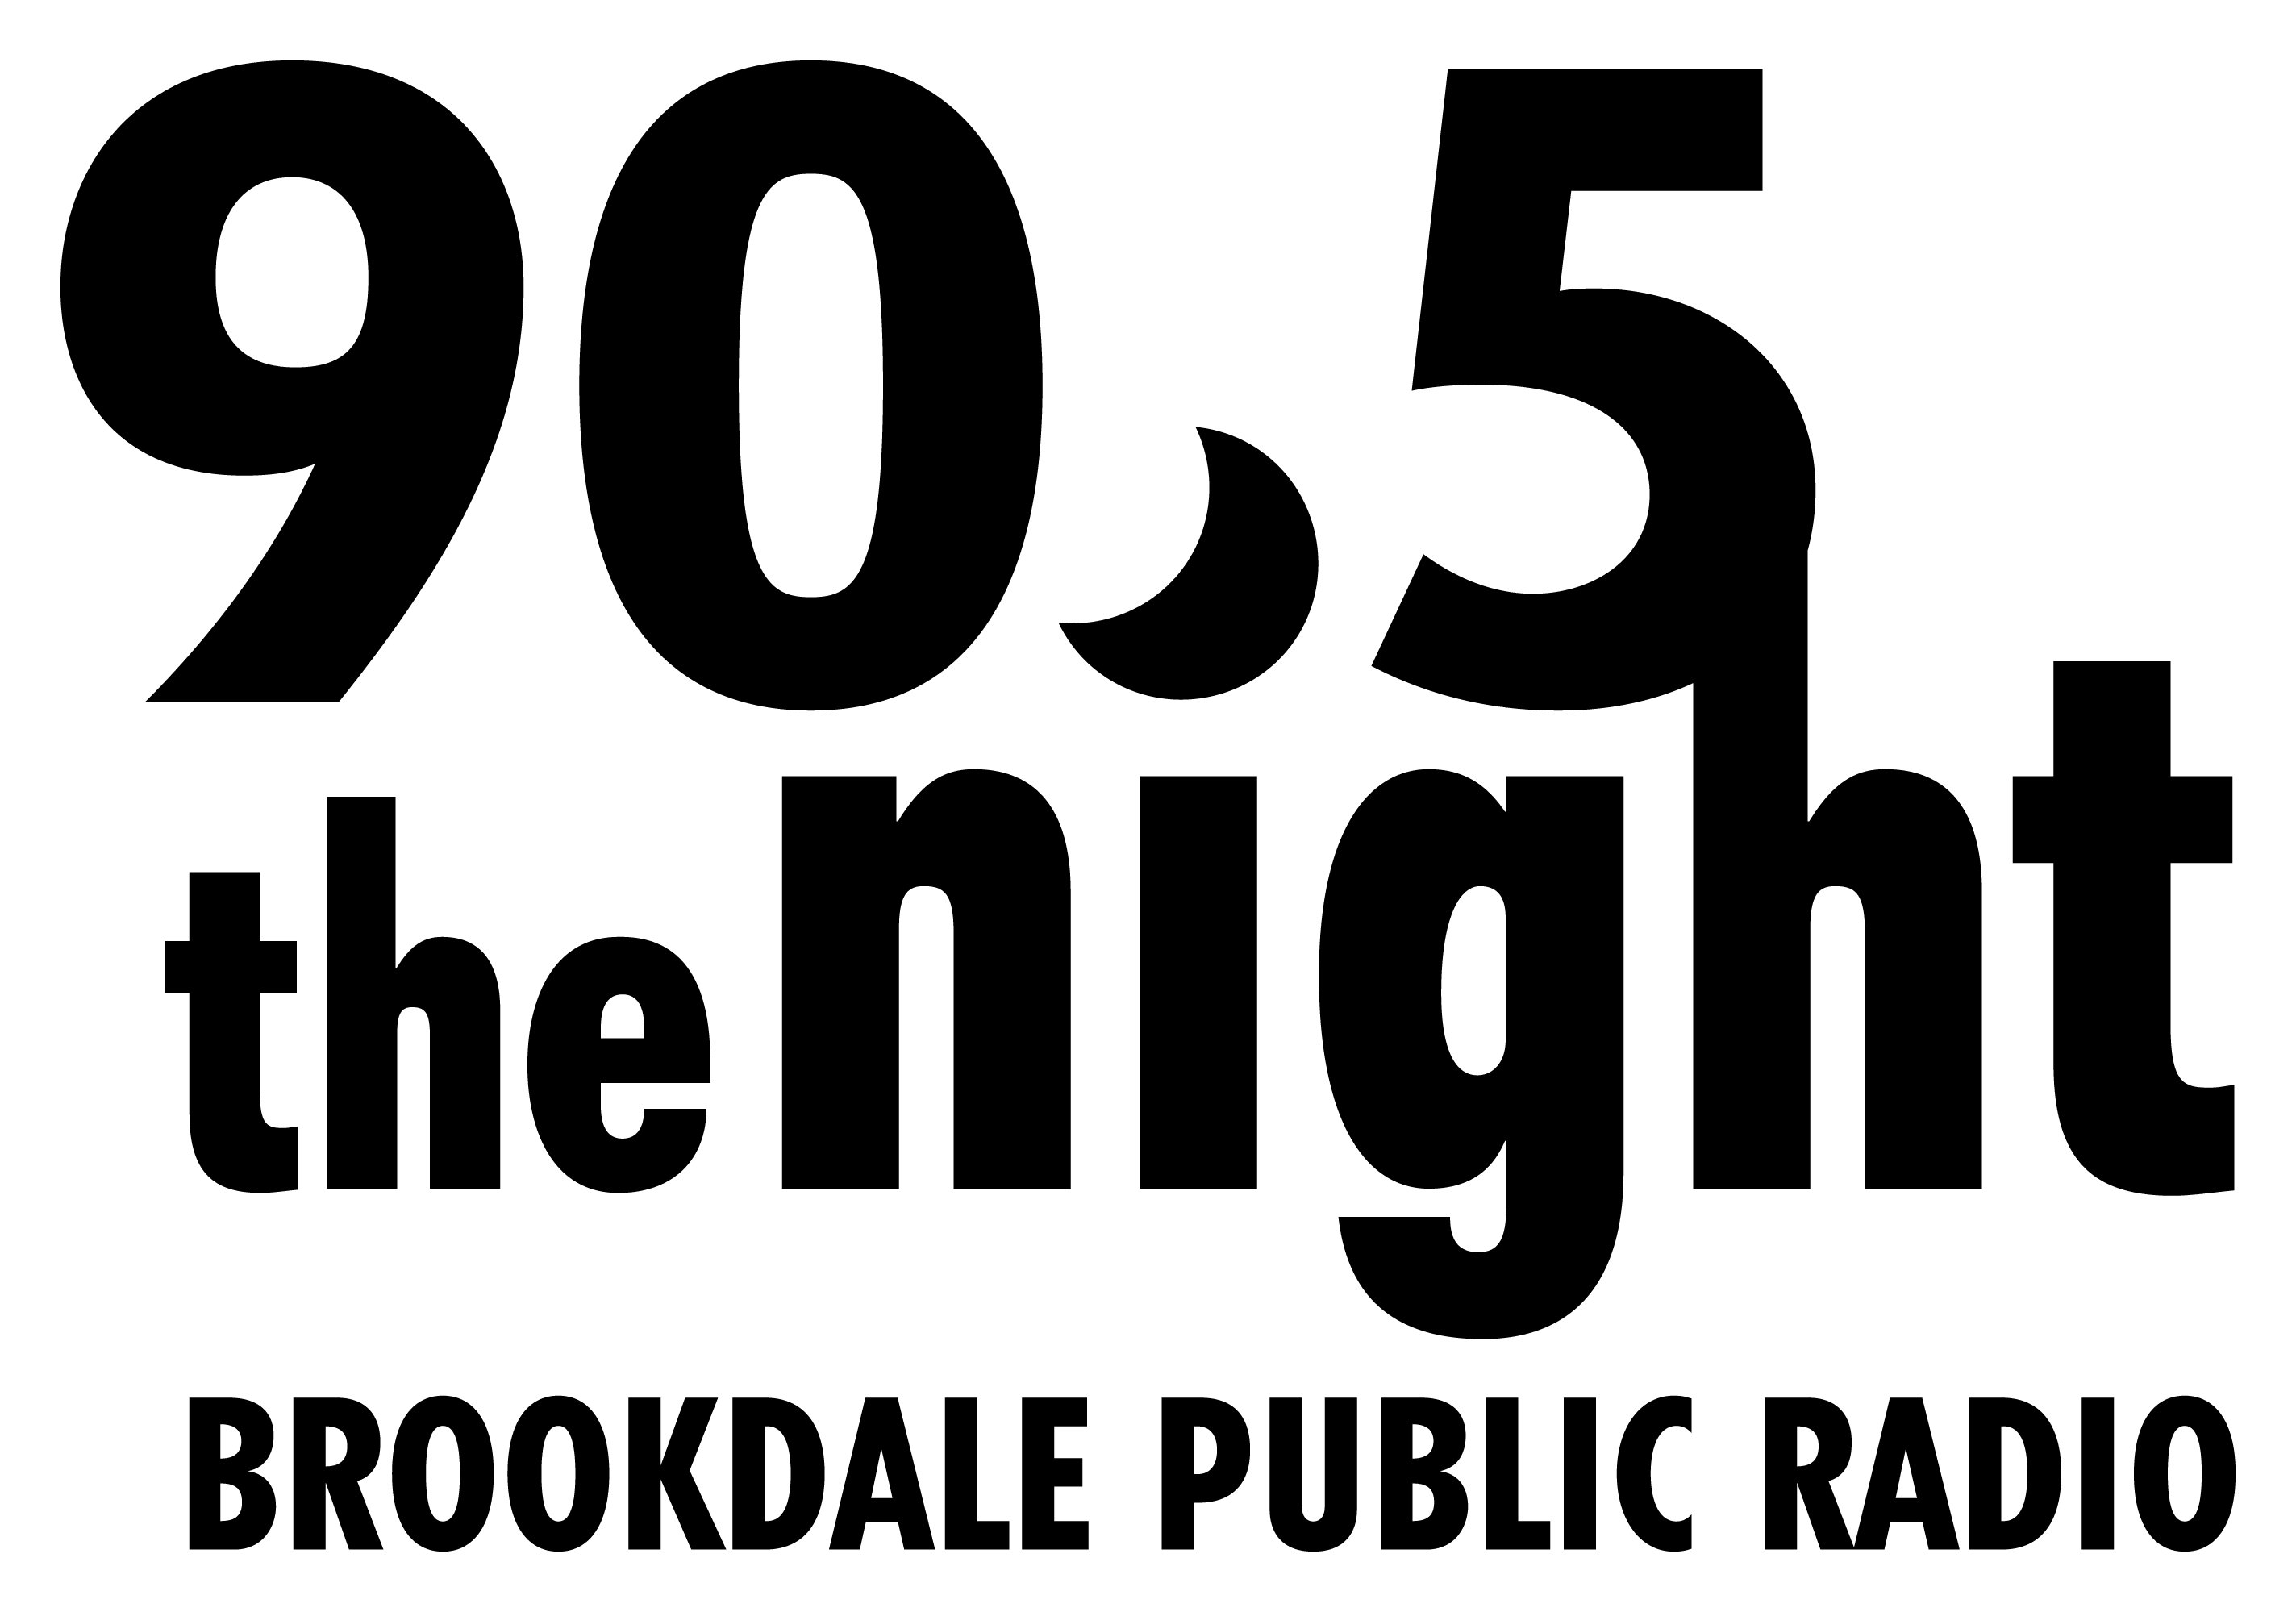 Brookdale Public Radio